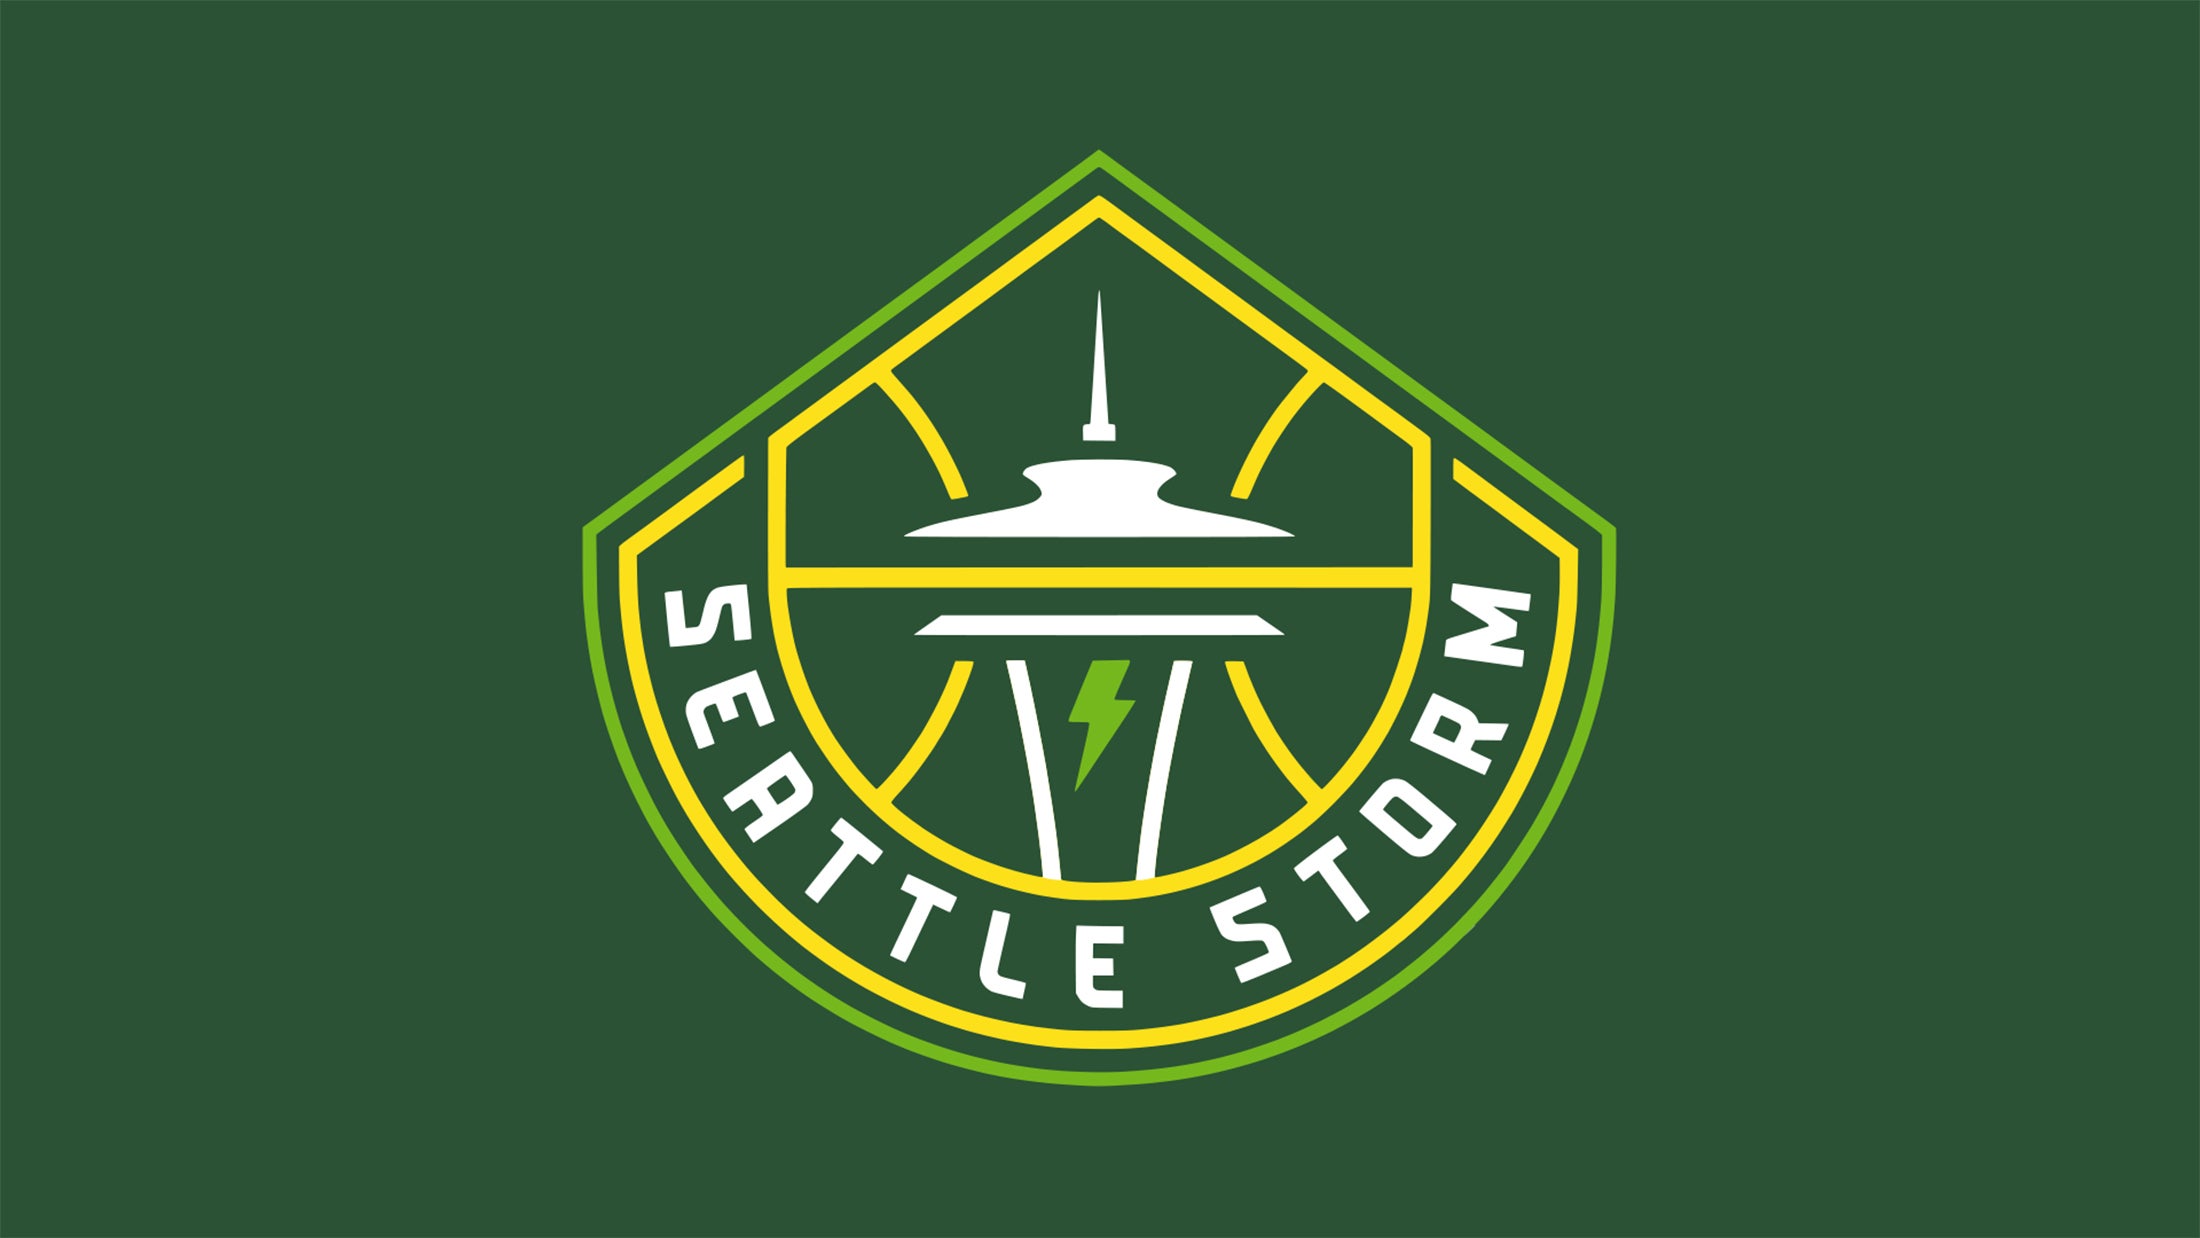 Seattle Storm vs. Las Vegas Aces in Seattle promo photo for STORM presale offer code